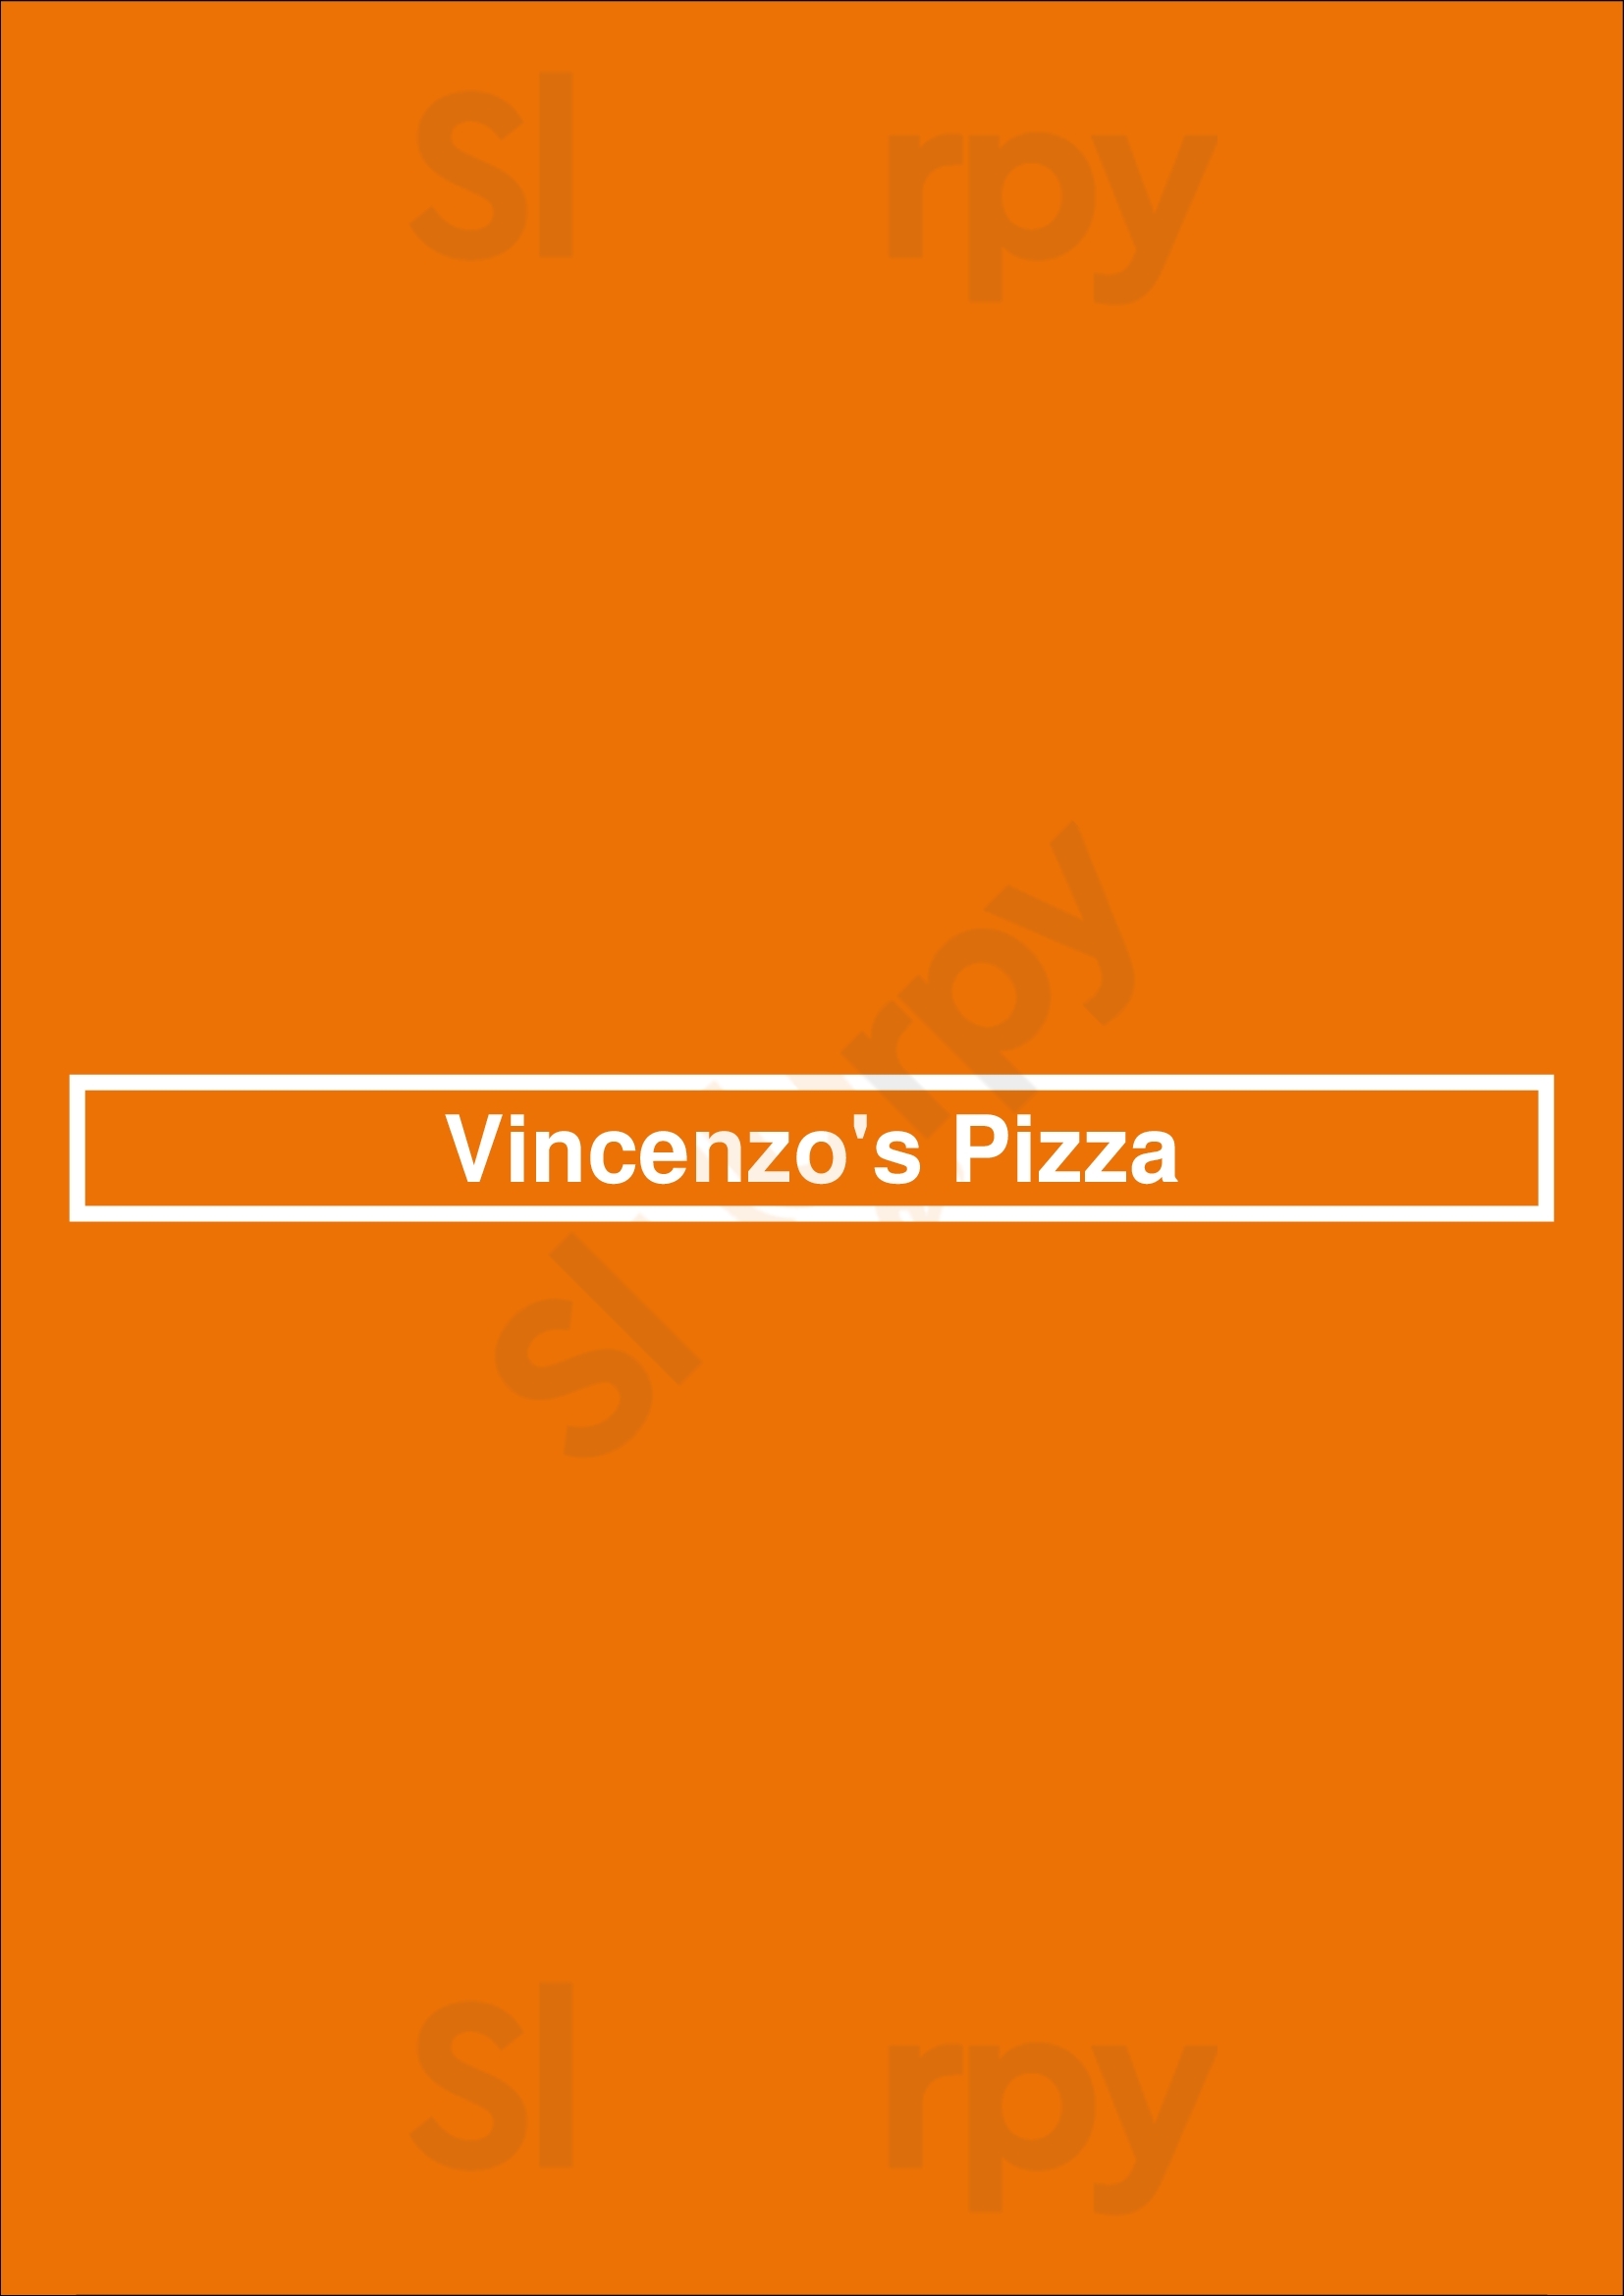 Vincenzo's Pizza Los Angeles Menu - 1